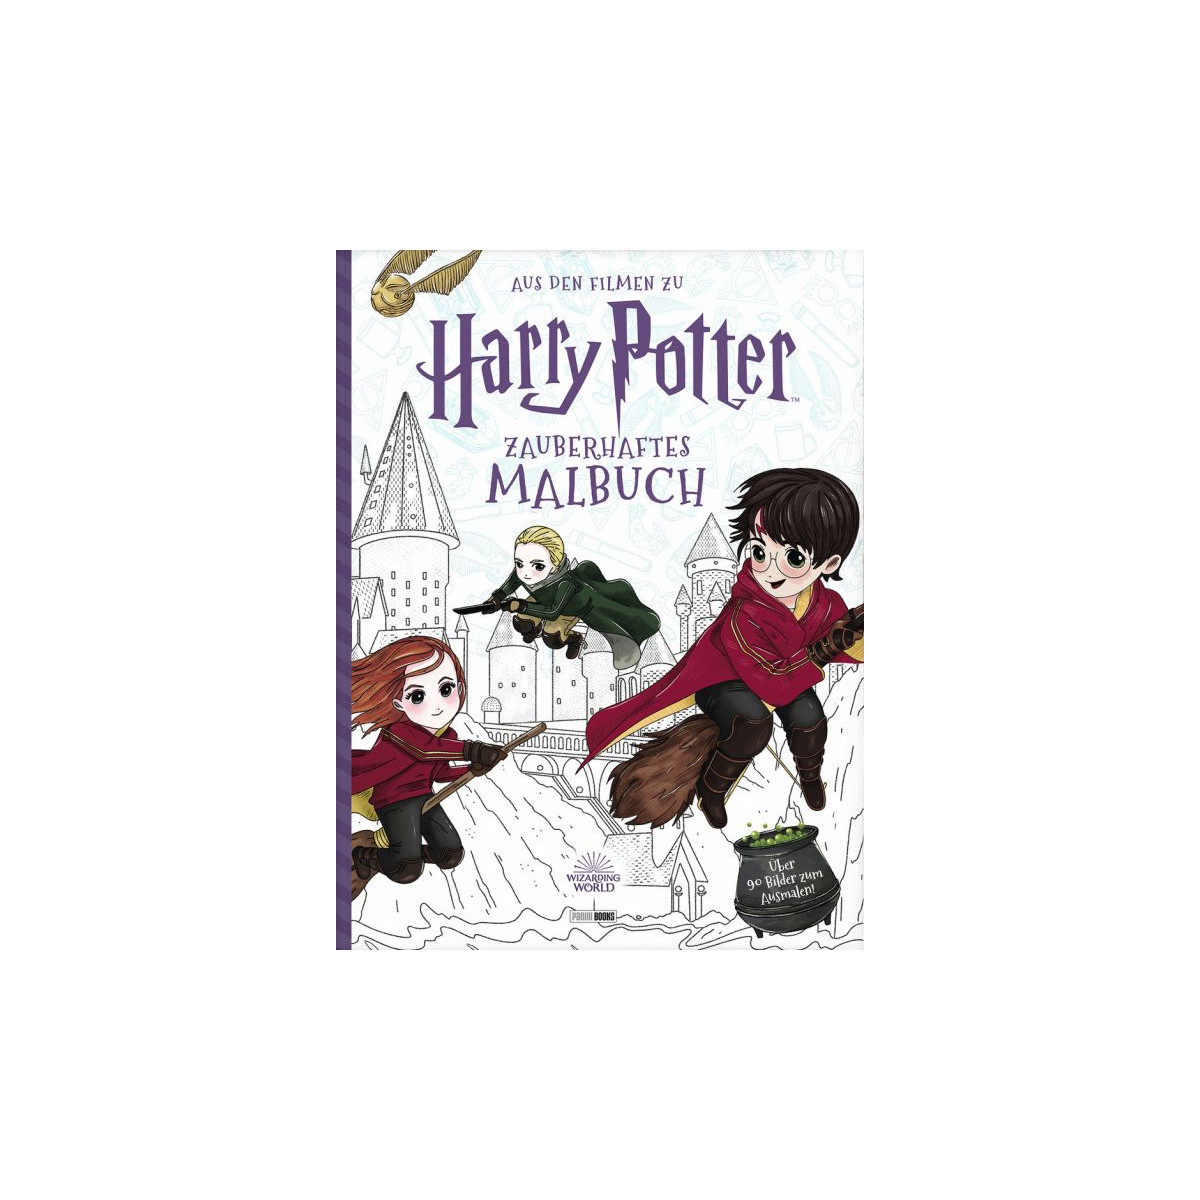 Harry Potter: Zauberhaftes Malbuch